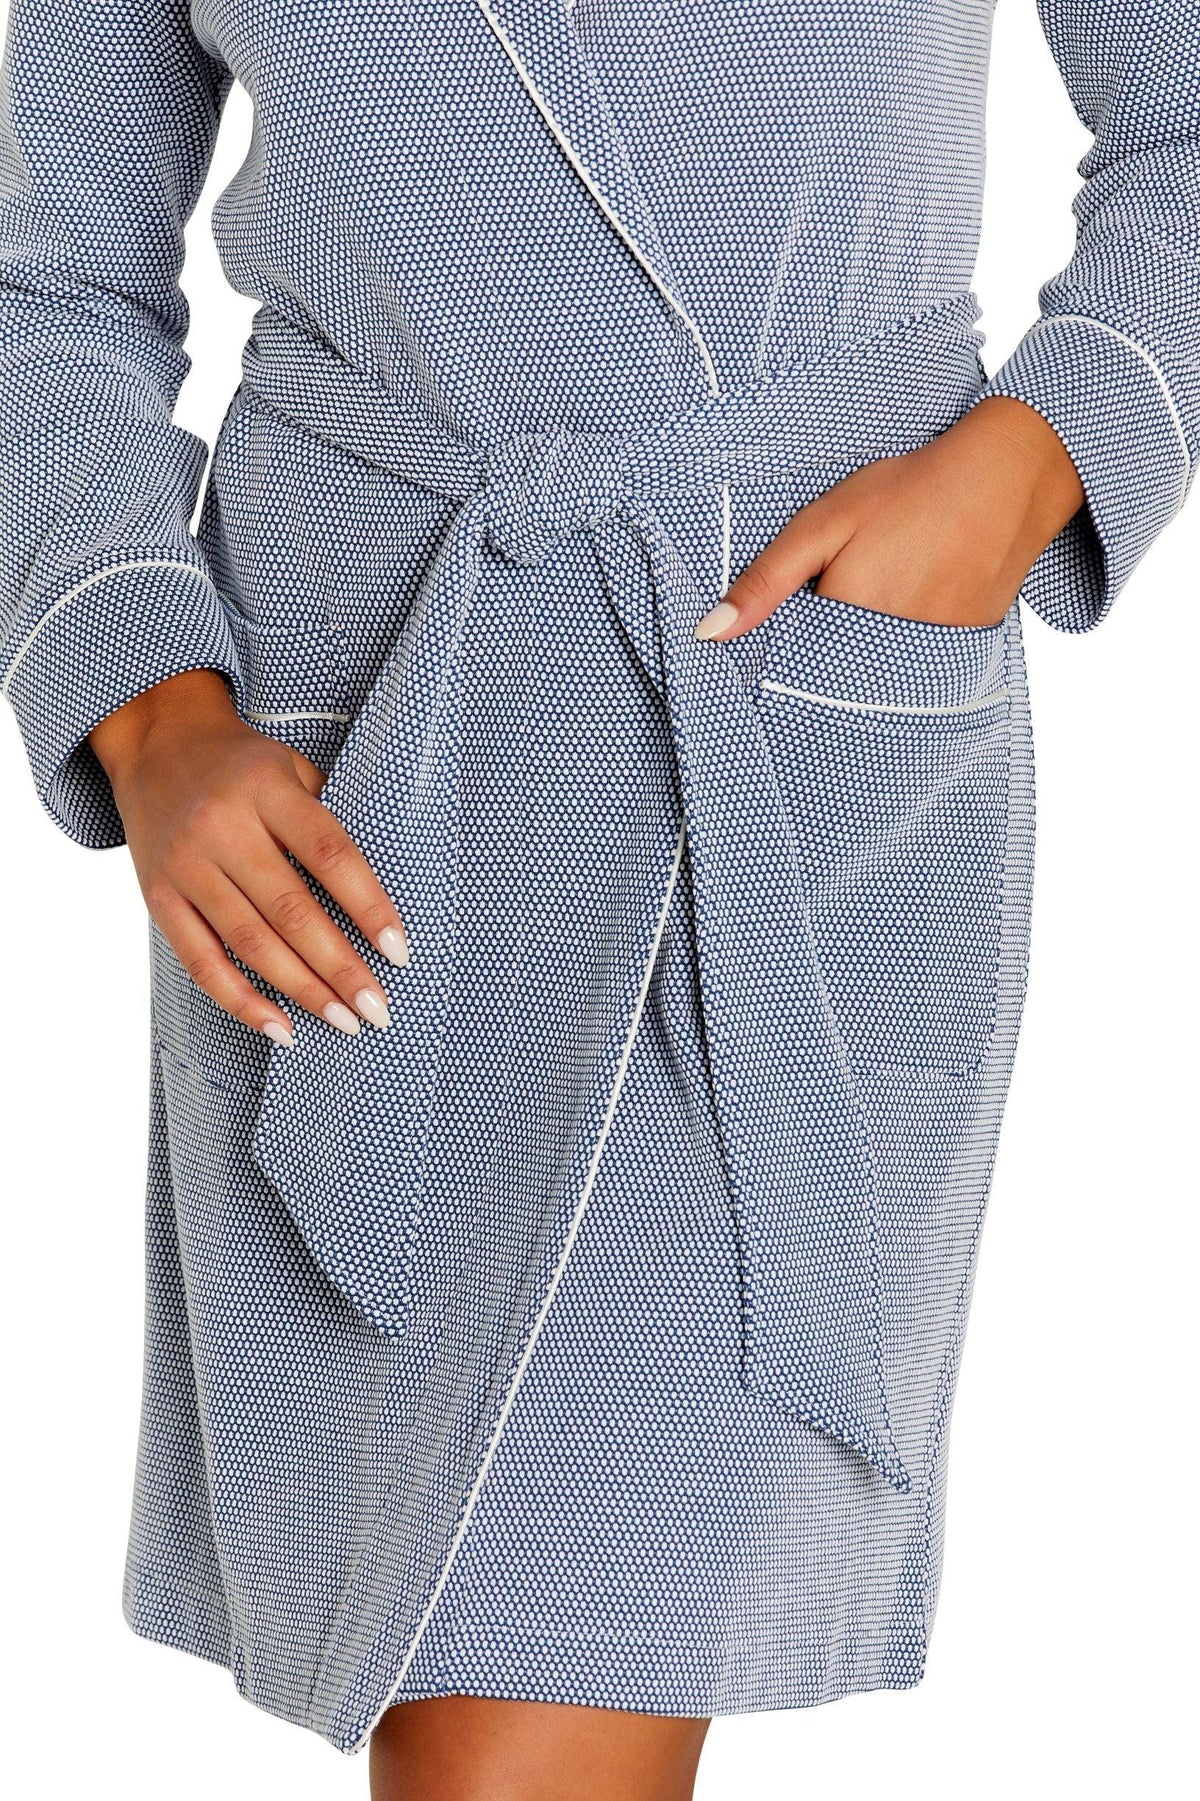 Grace Long Sleeve Short Textured Robe - Marelle Sleepwear